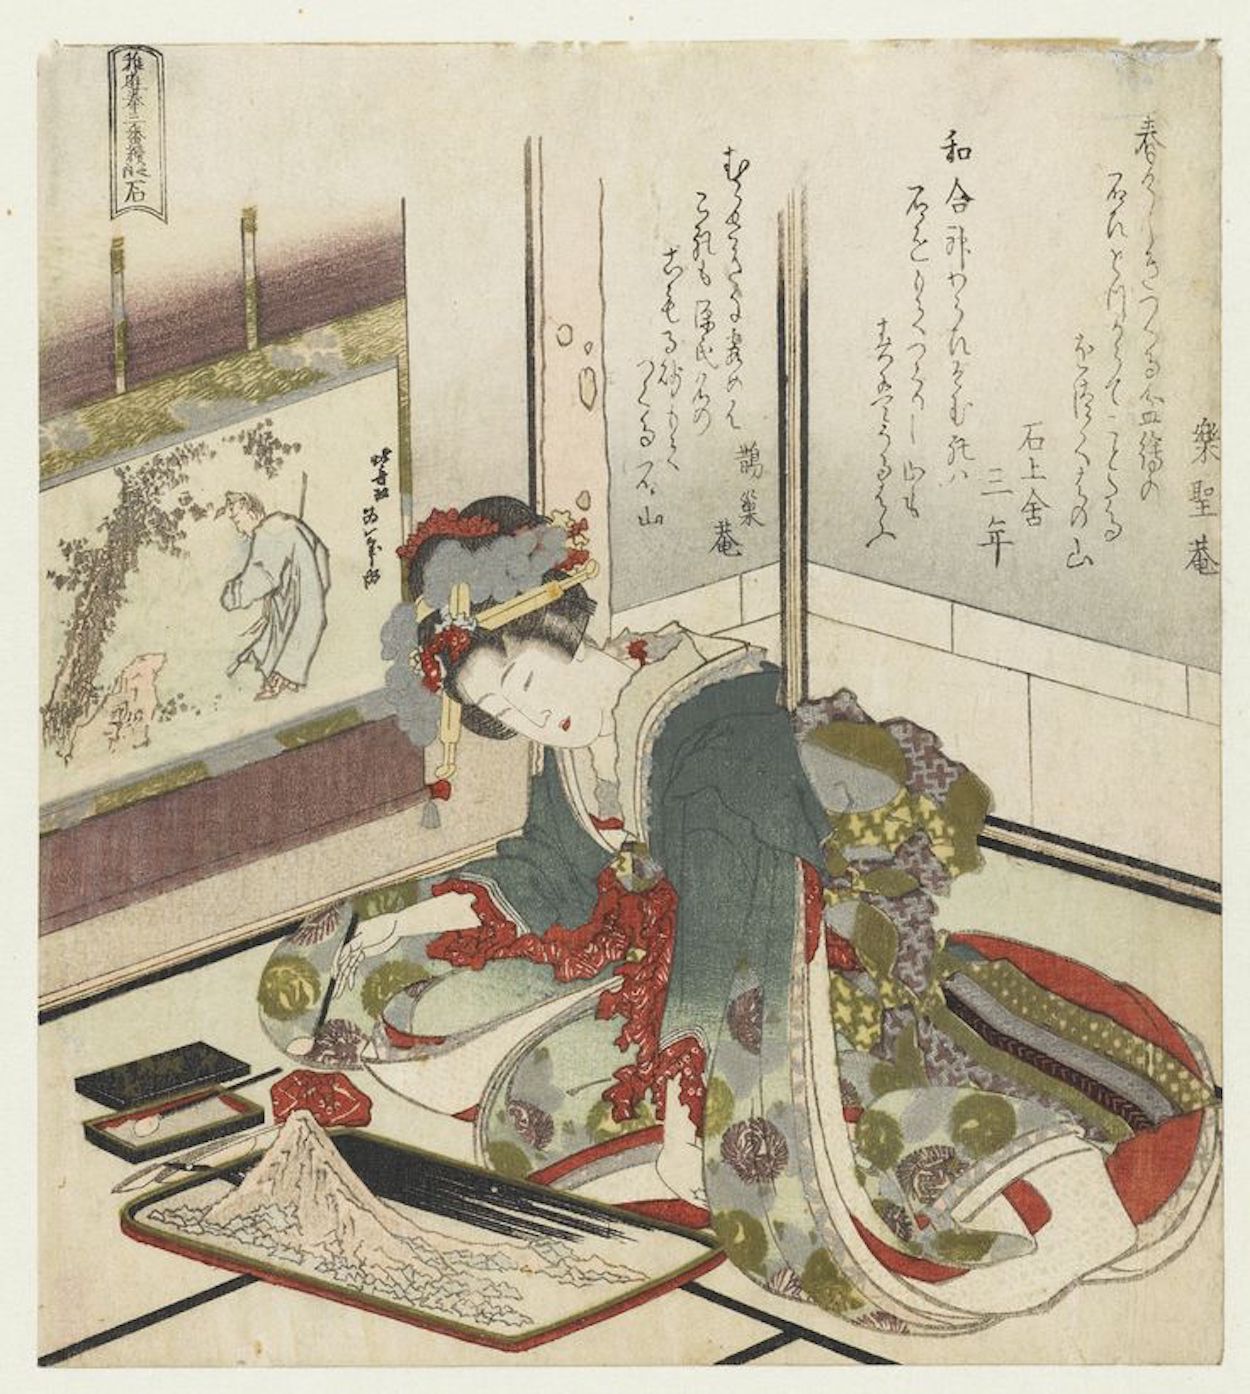 Piatră by Katsushika Hokusai - 1823 